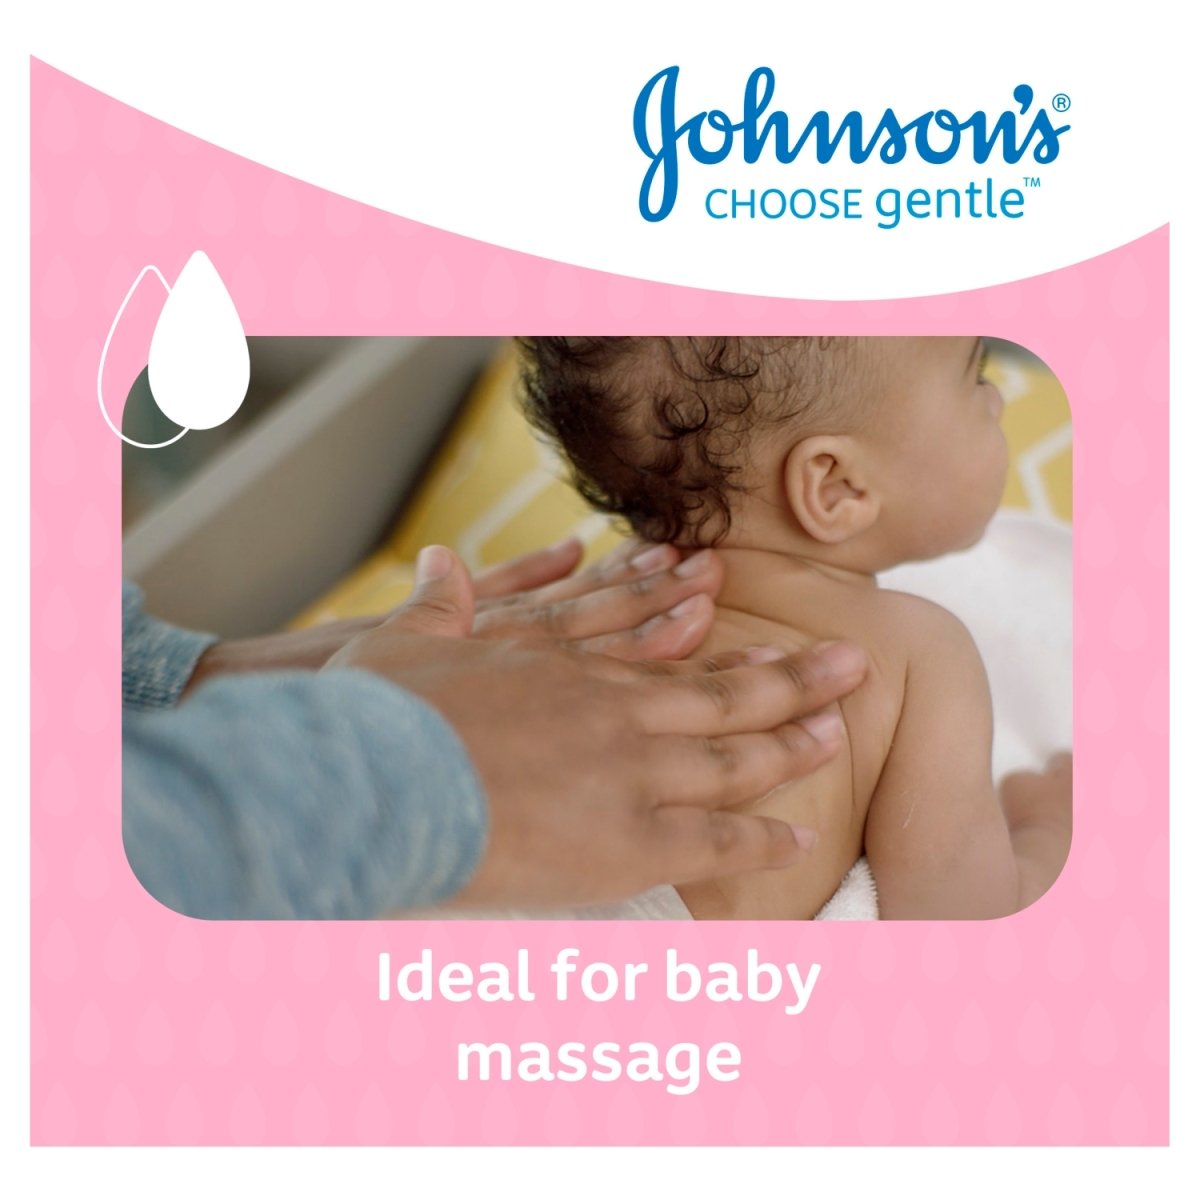 Johnsons Baby Oil 100ml Regular - Intamarque 3574669909211